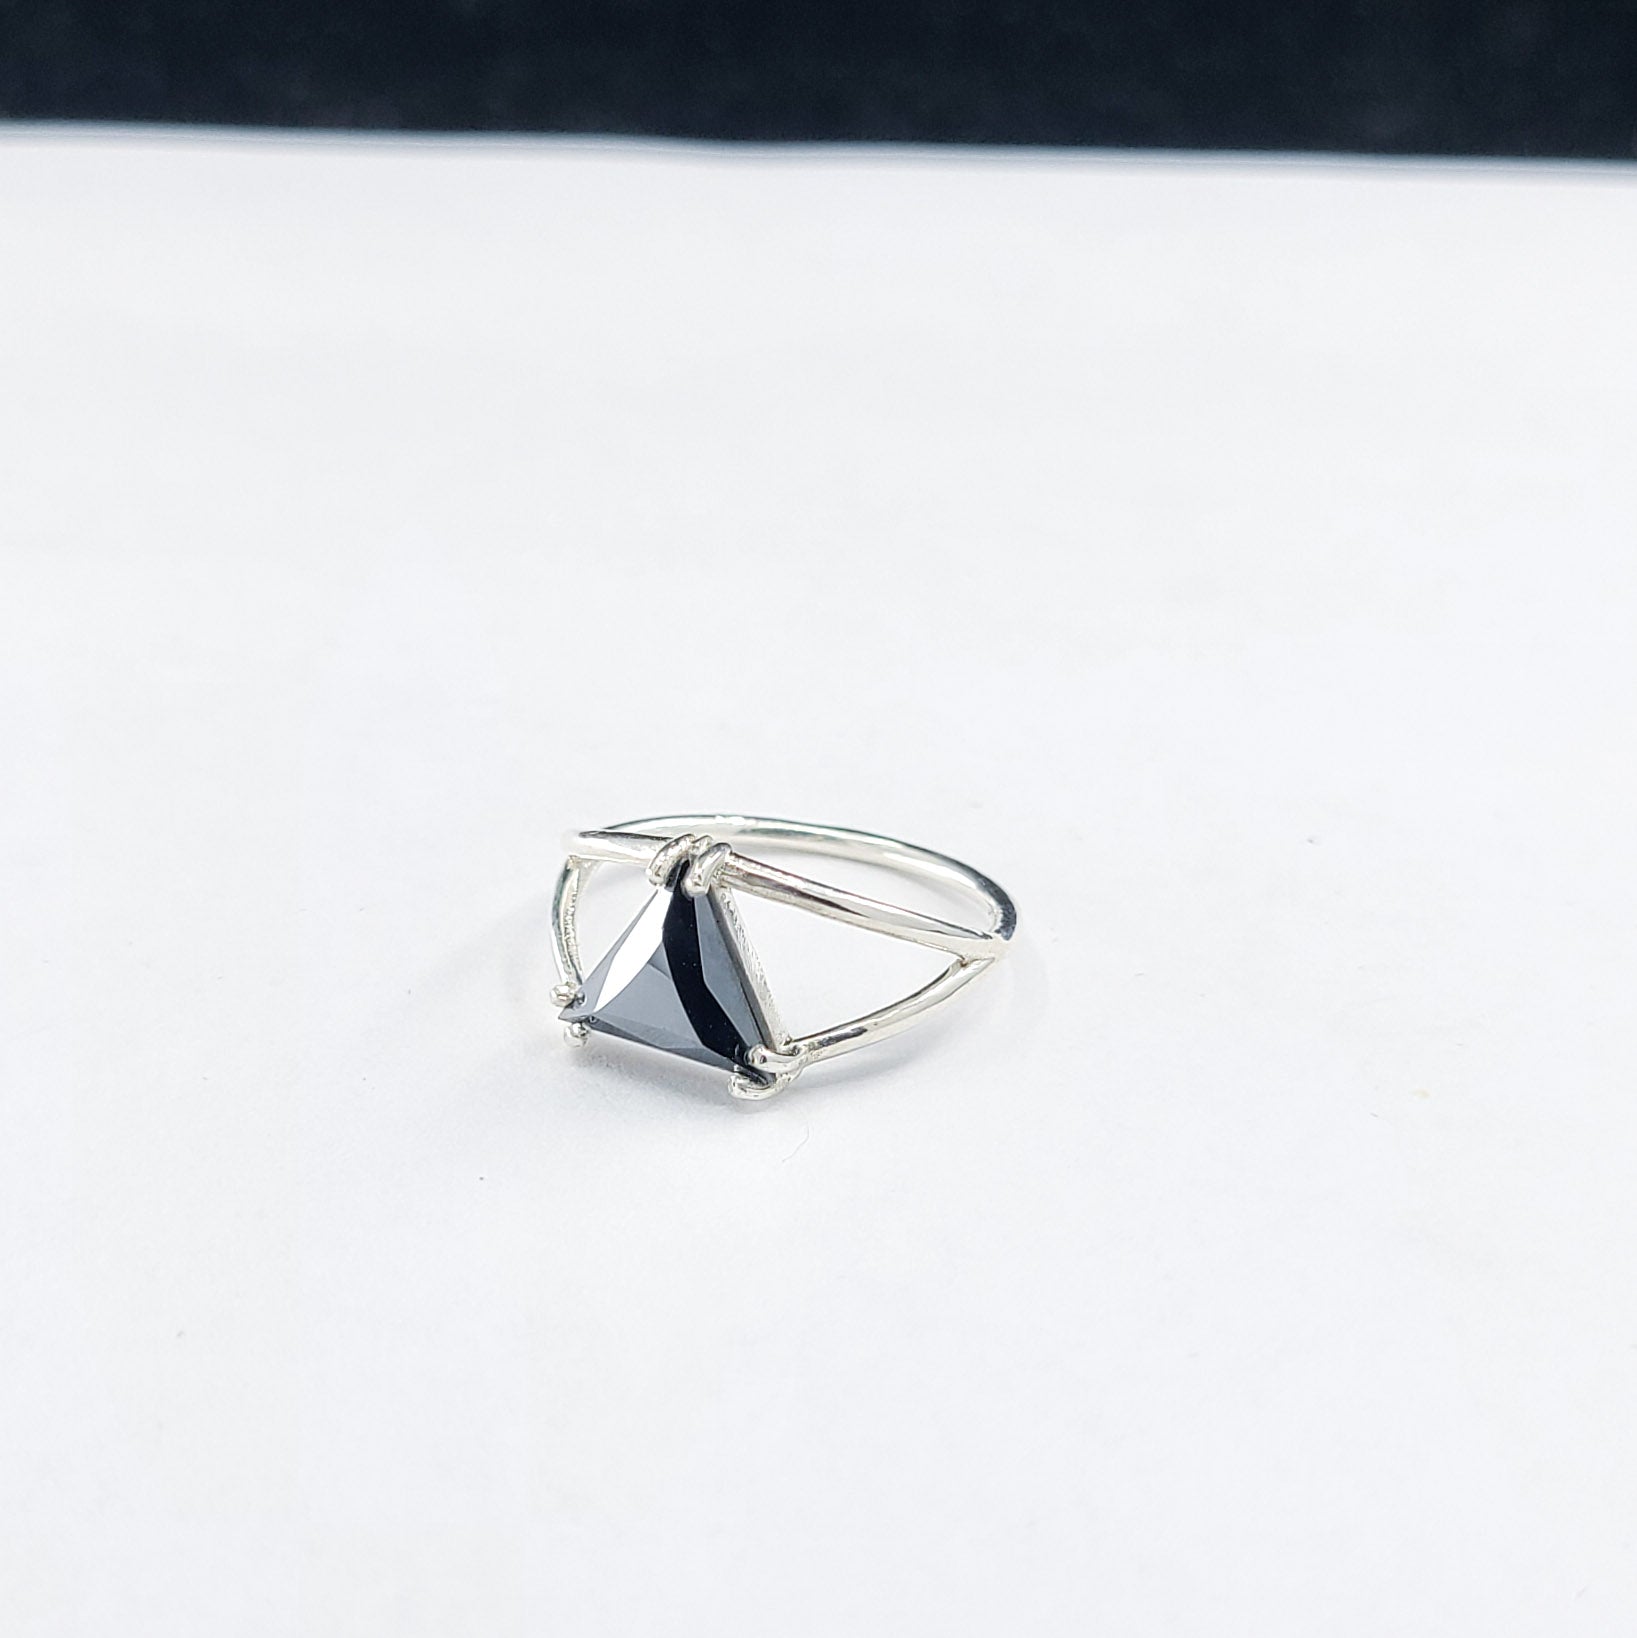 Sparkling Hematite Triangle Ring